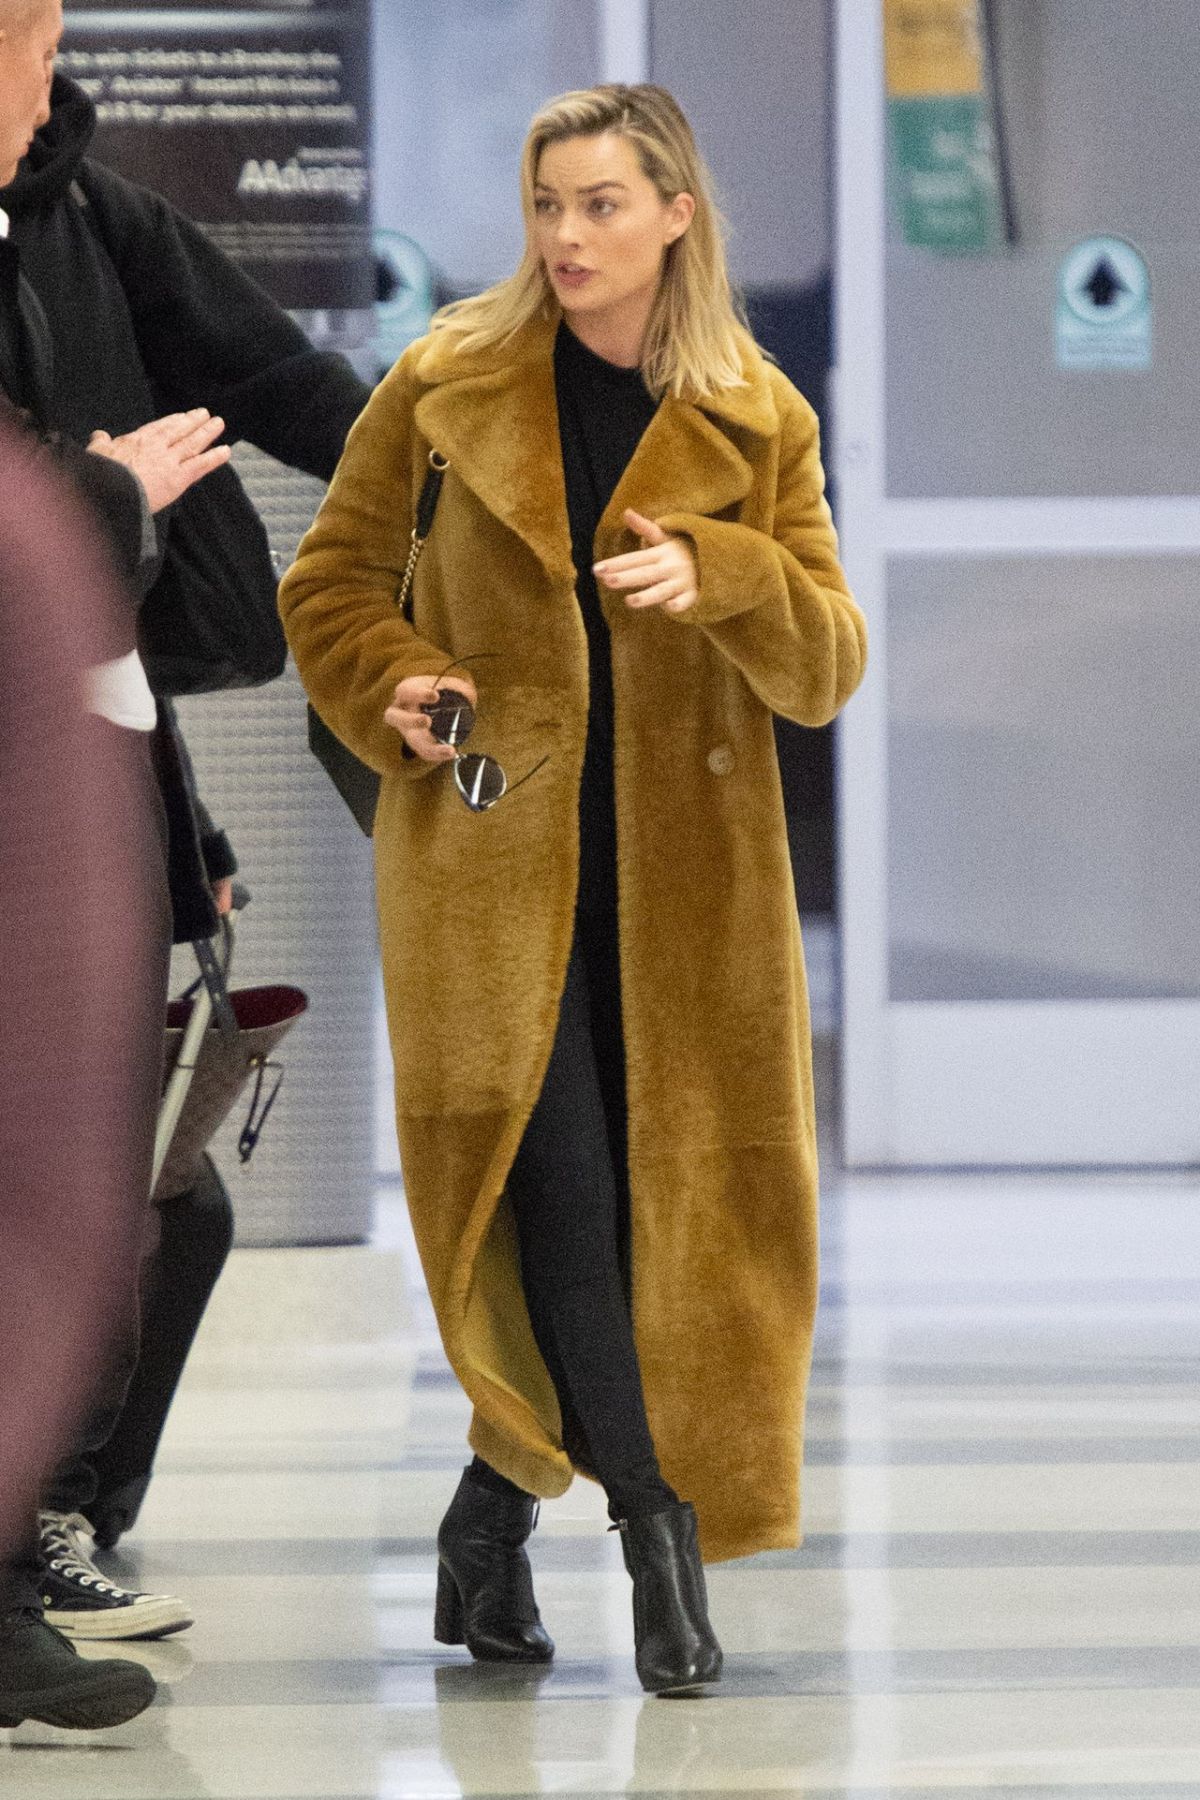 MARGOT ROBBIE at JFK Airport in New York 12/02/2018 – HawtCelebs